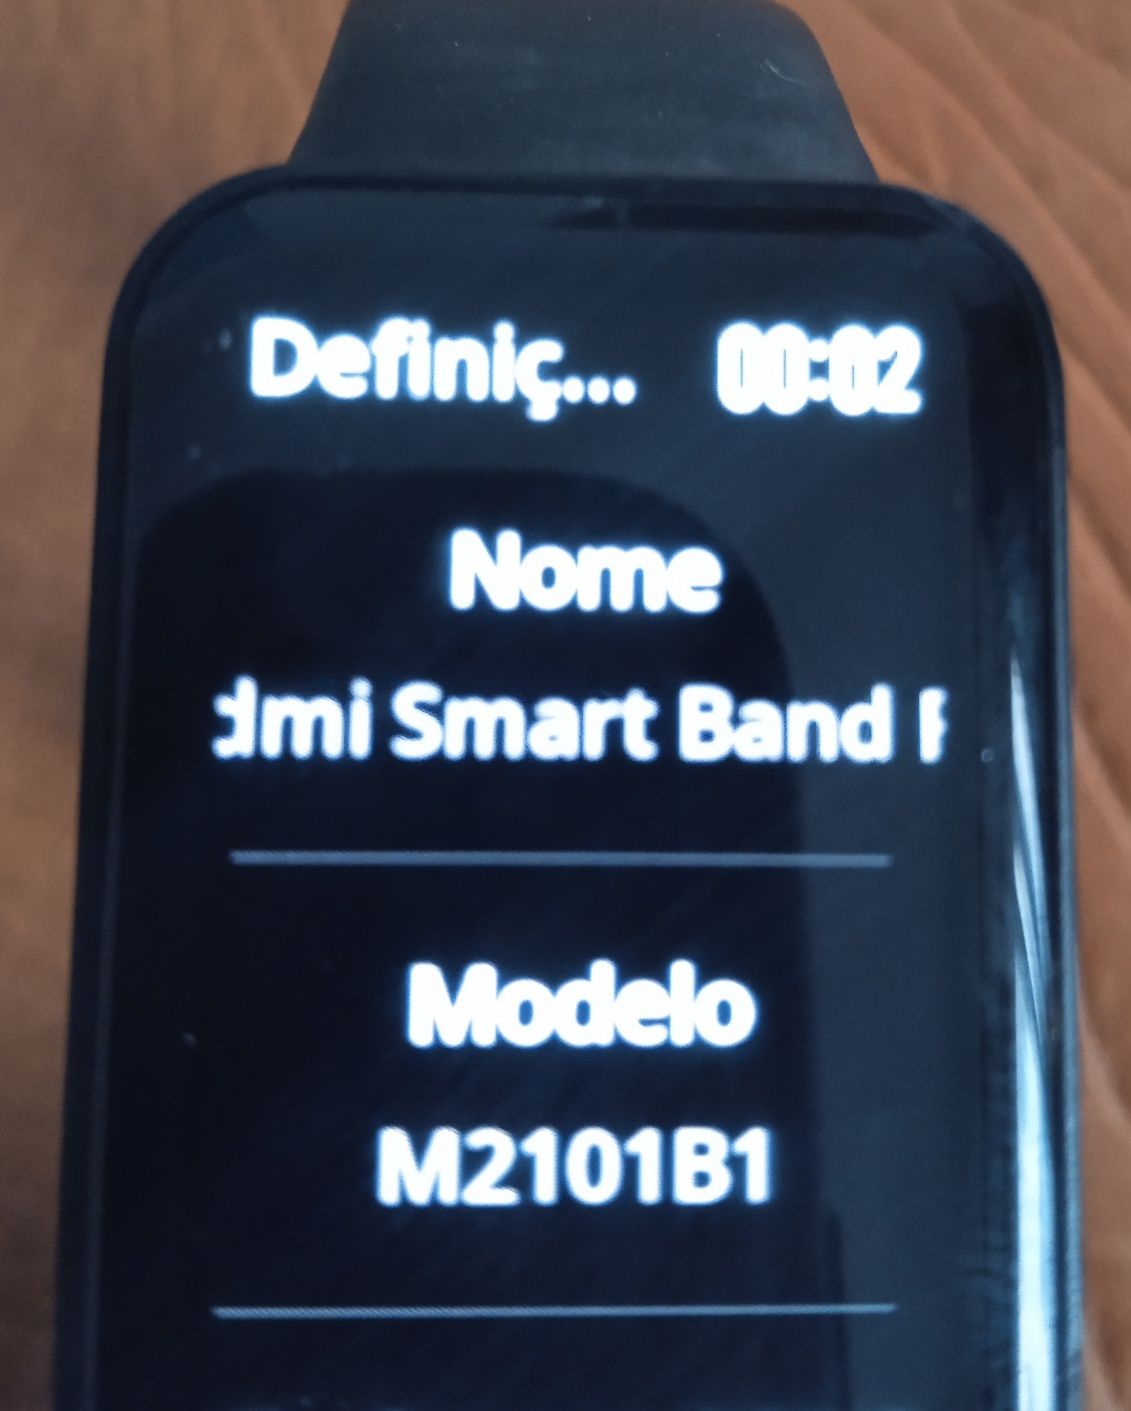 Redmi Smart Band Pro m2101b1